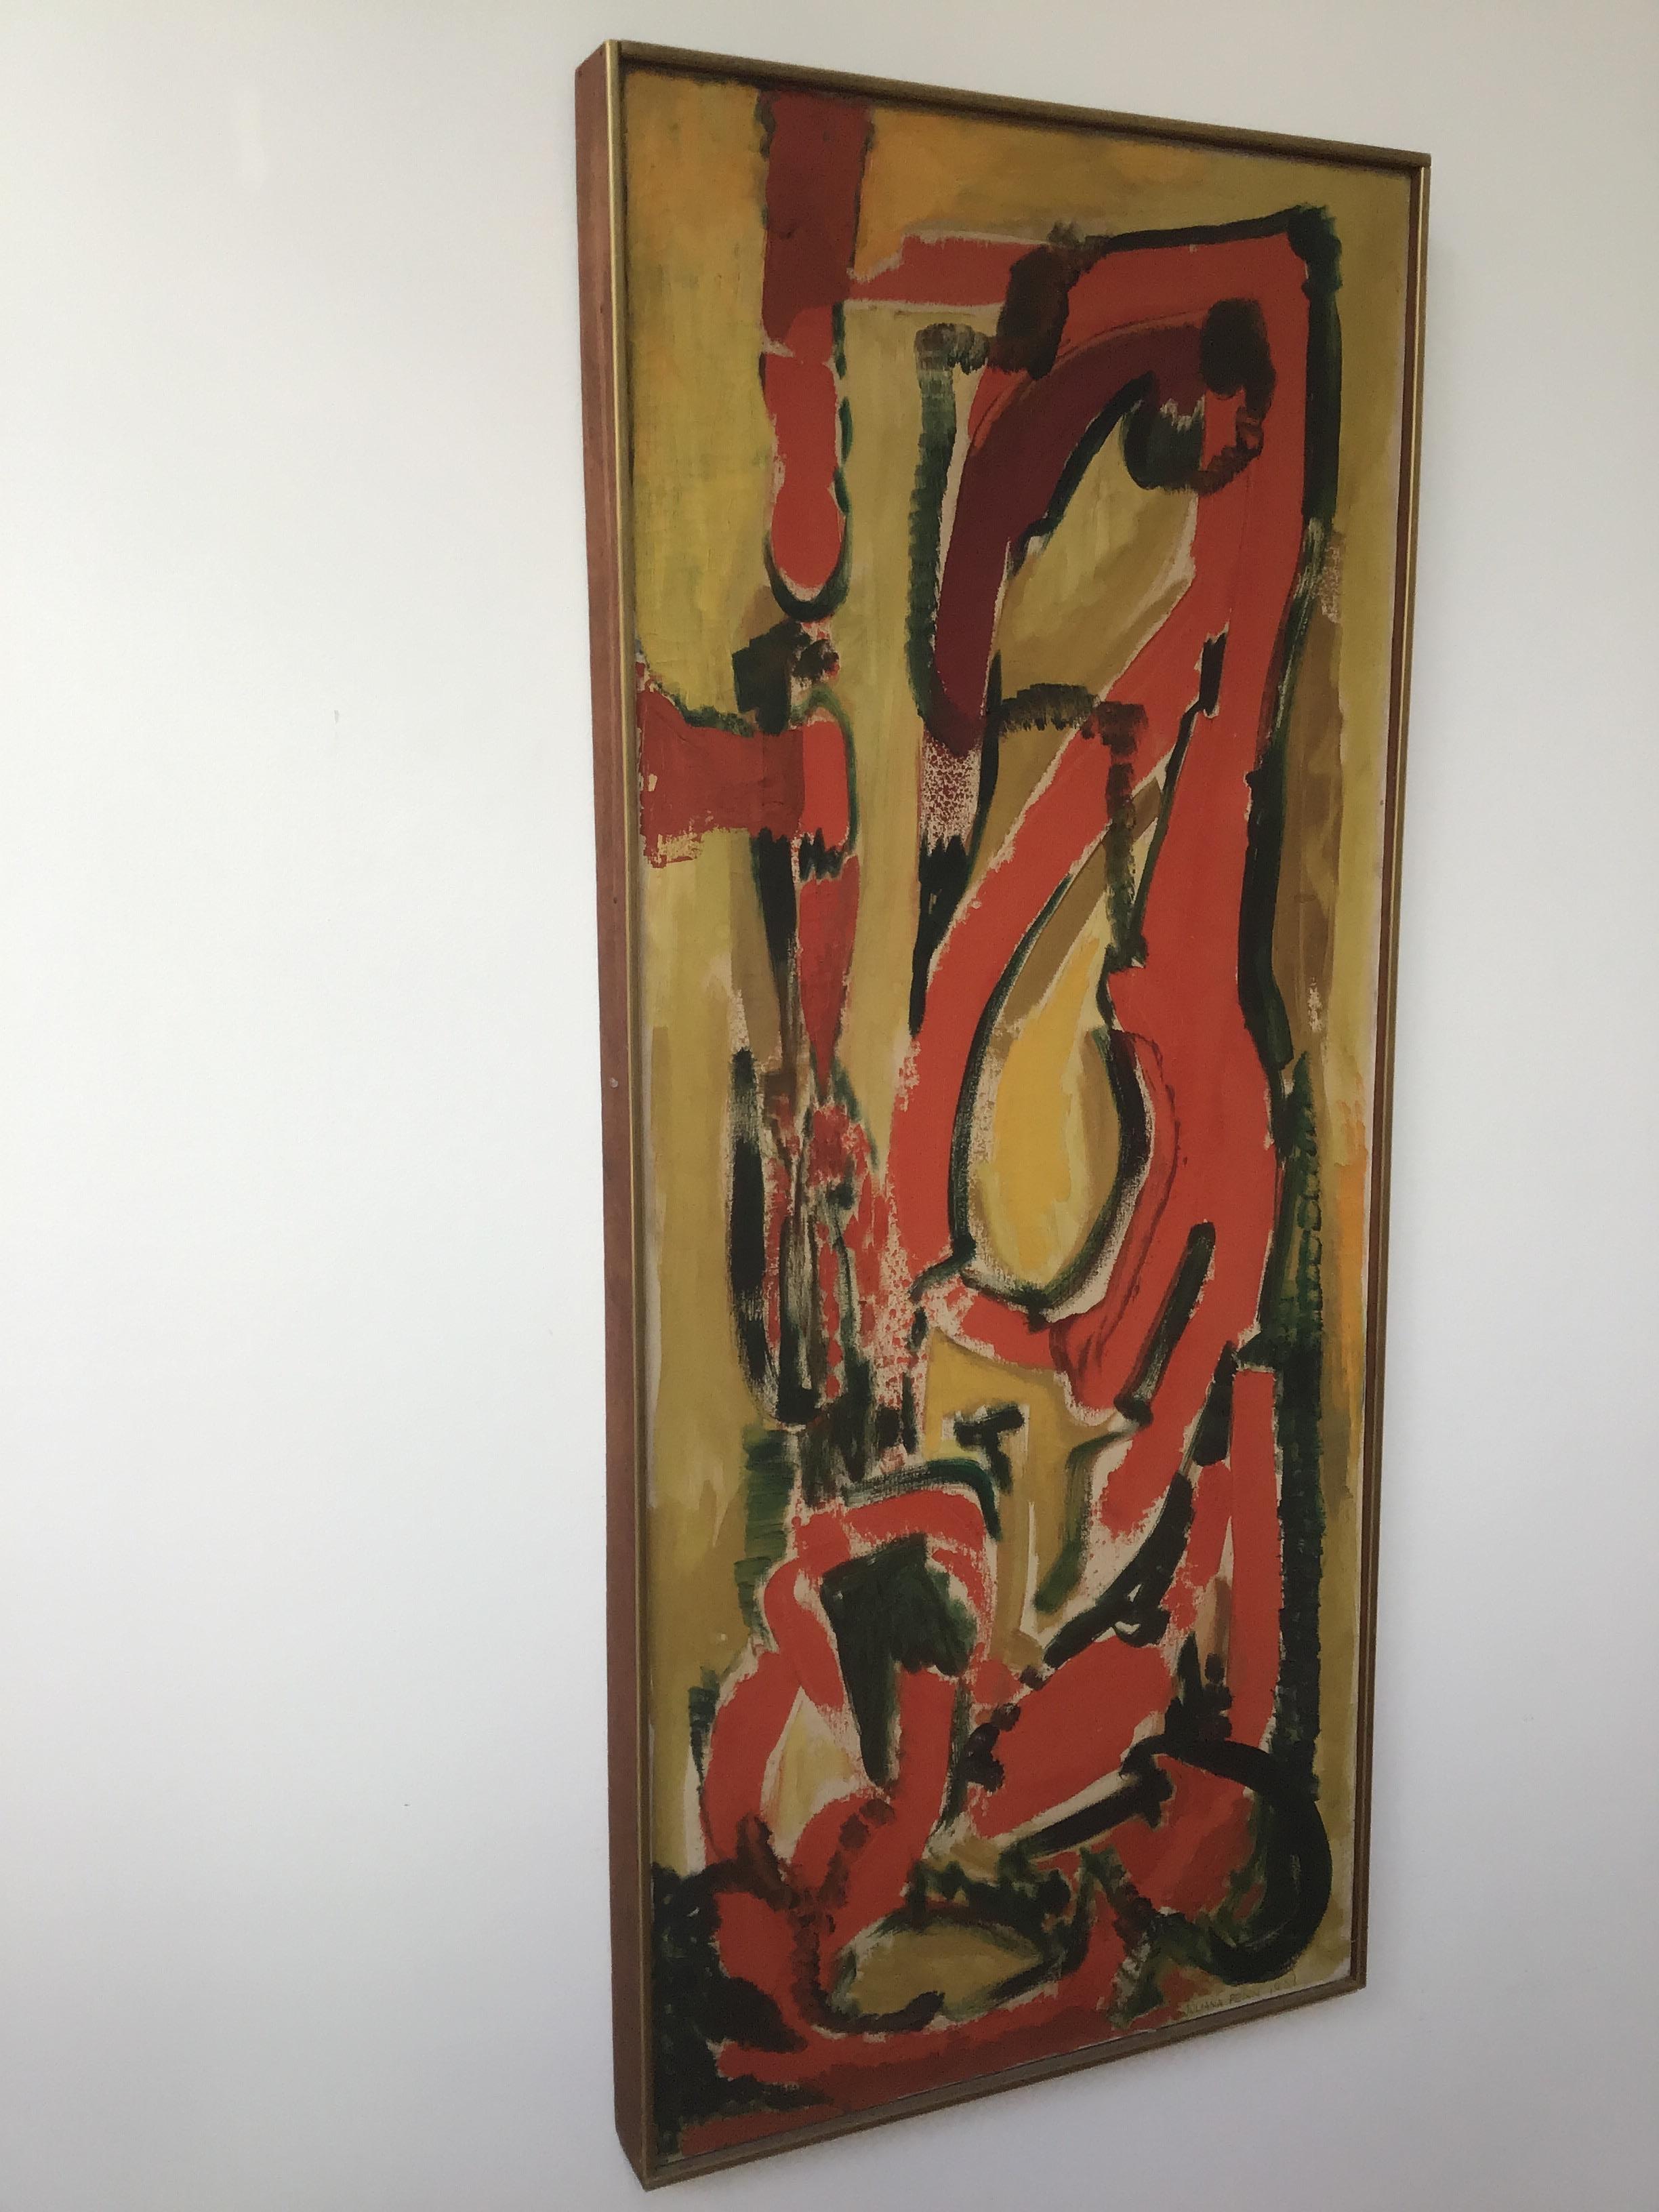 Abstract oil on canvas signed Juliana Penn, 1959.